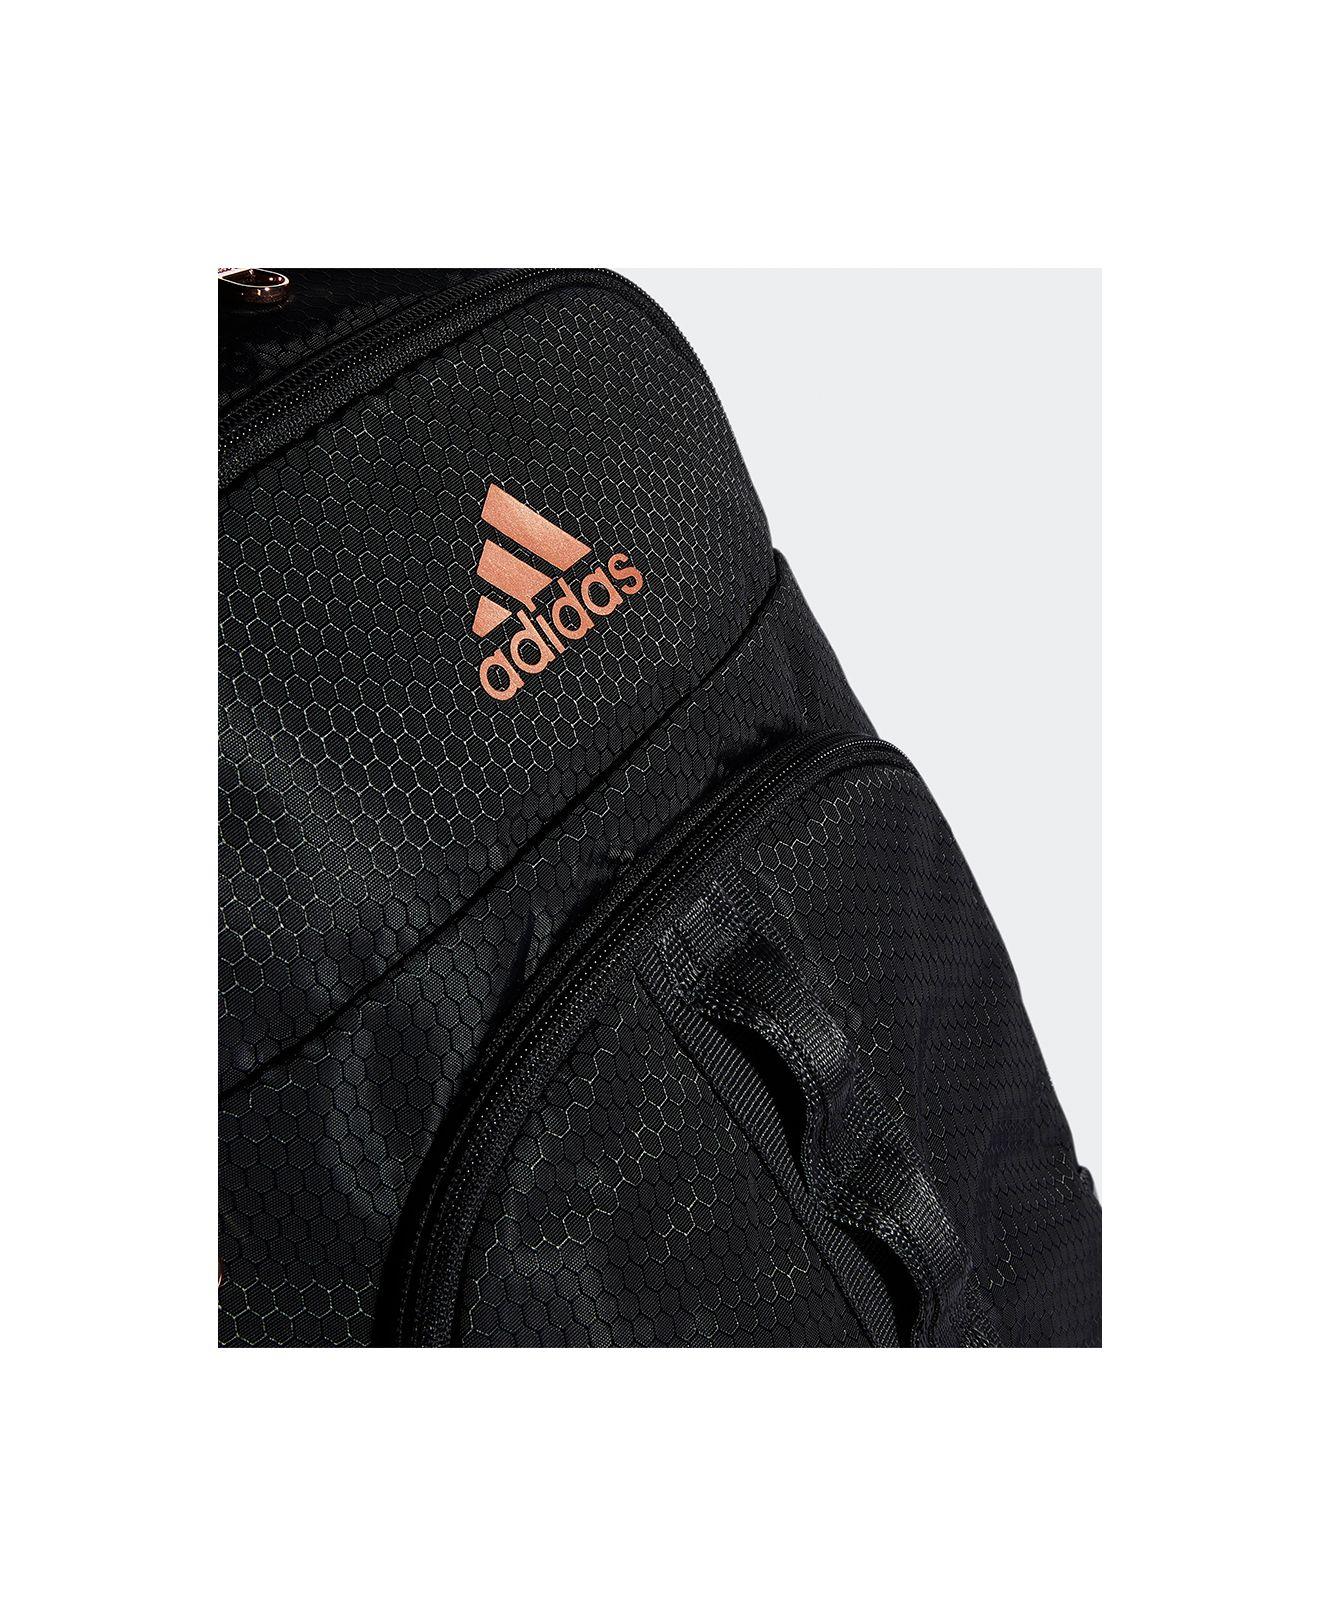 adidas Prime Backpack in Black for Men | Lyst